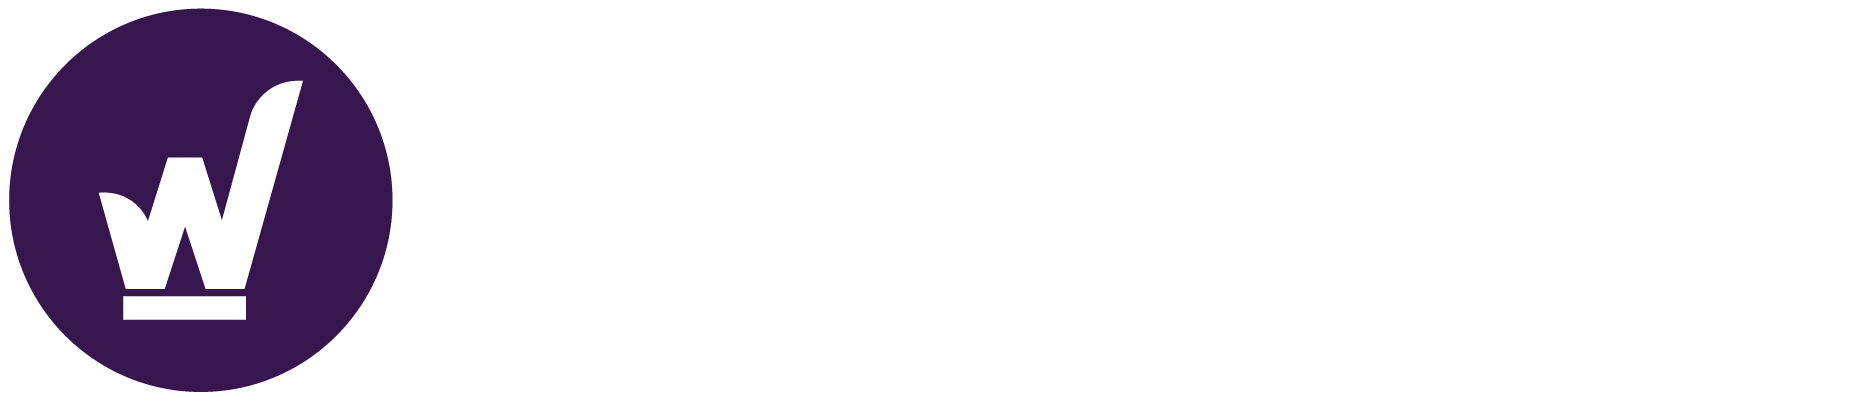 Growthzilla logo